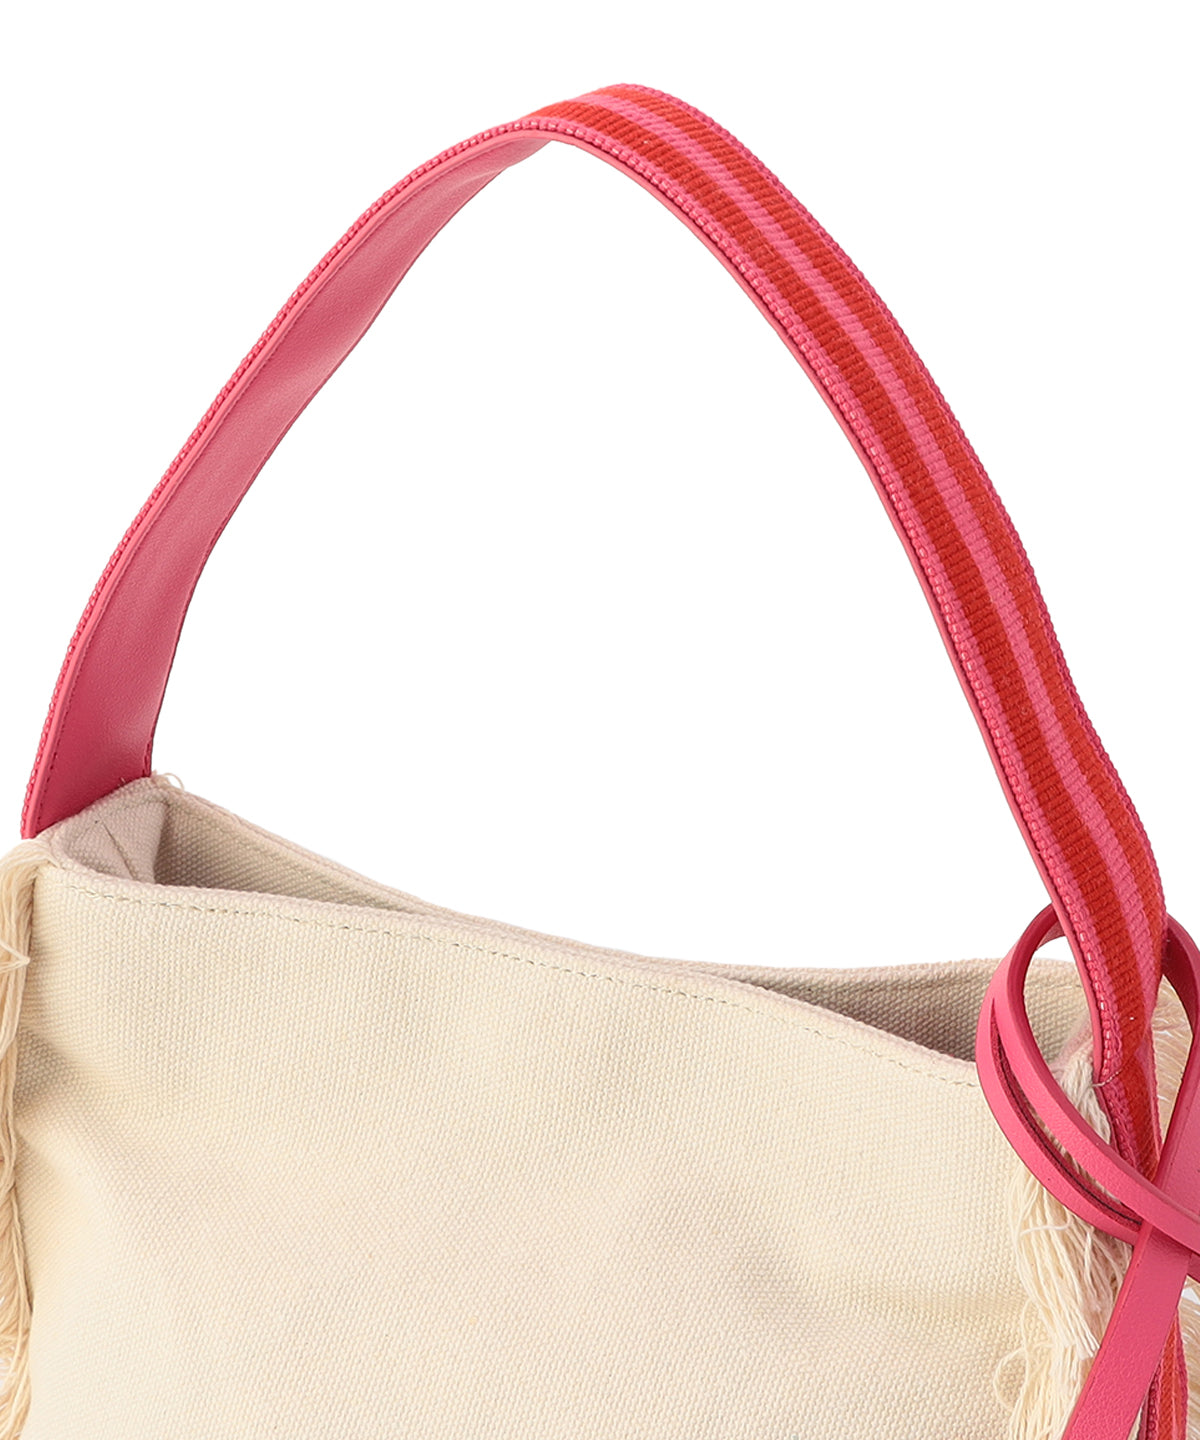 Canvas Kente fringe Bag (Small) RED/PINK